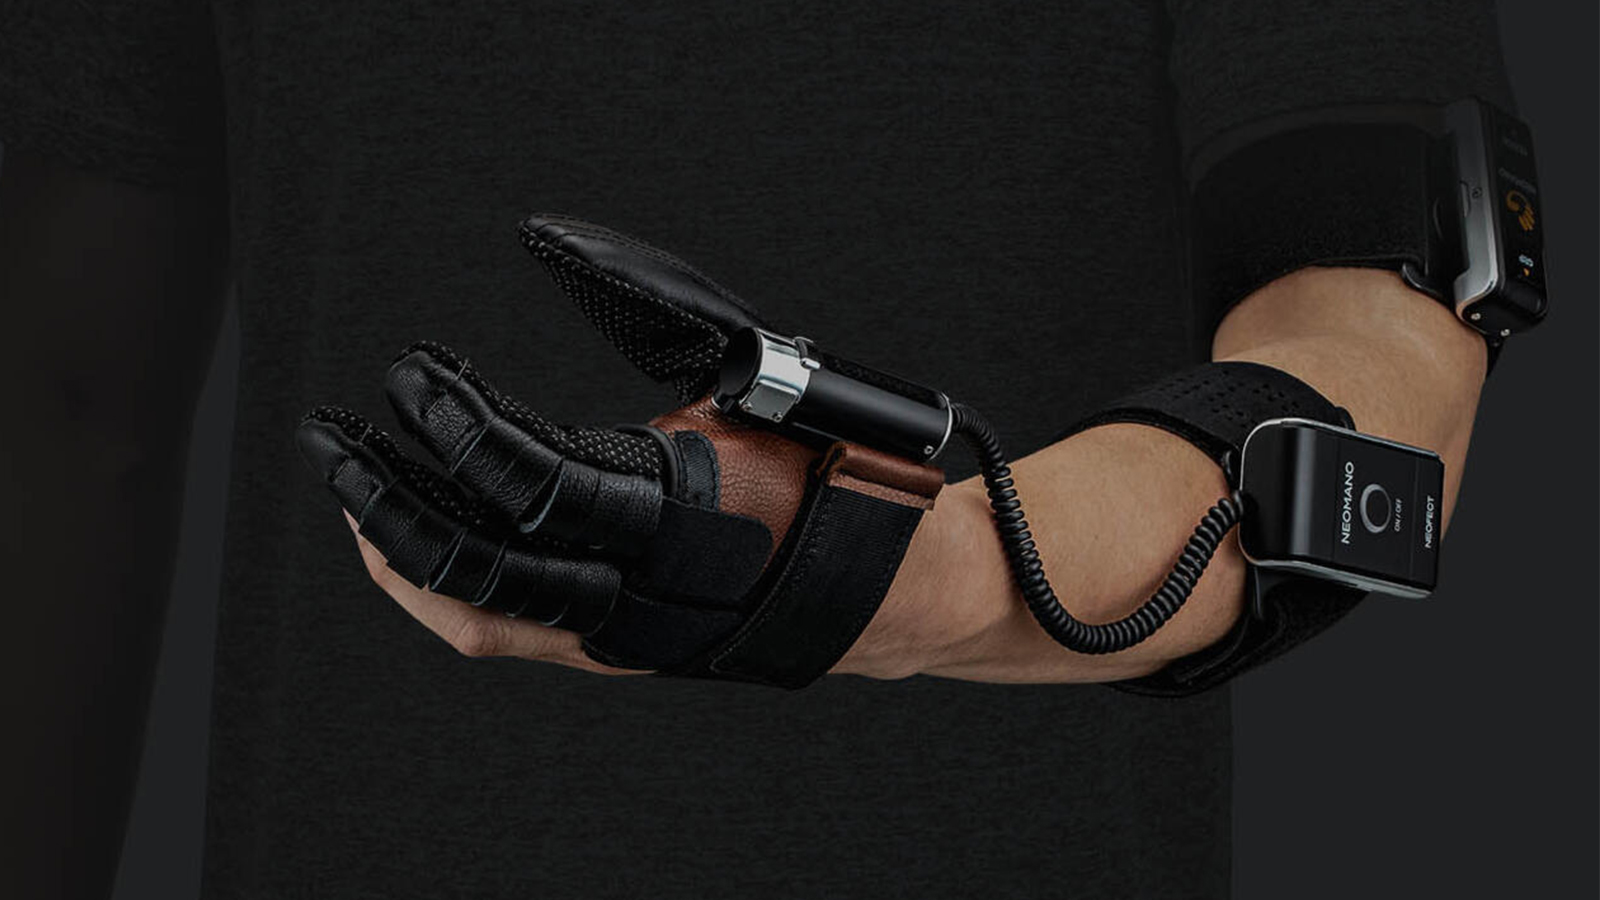 Neofect NeoMano Robotic Glove